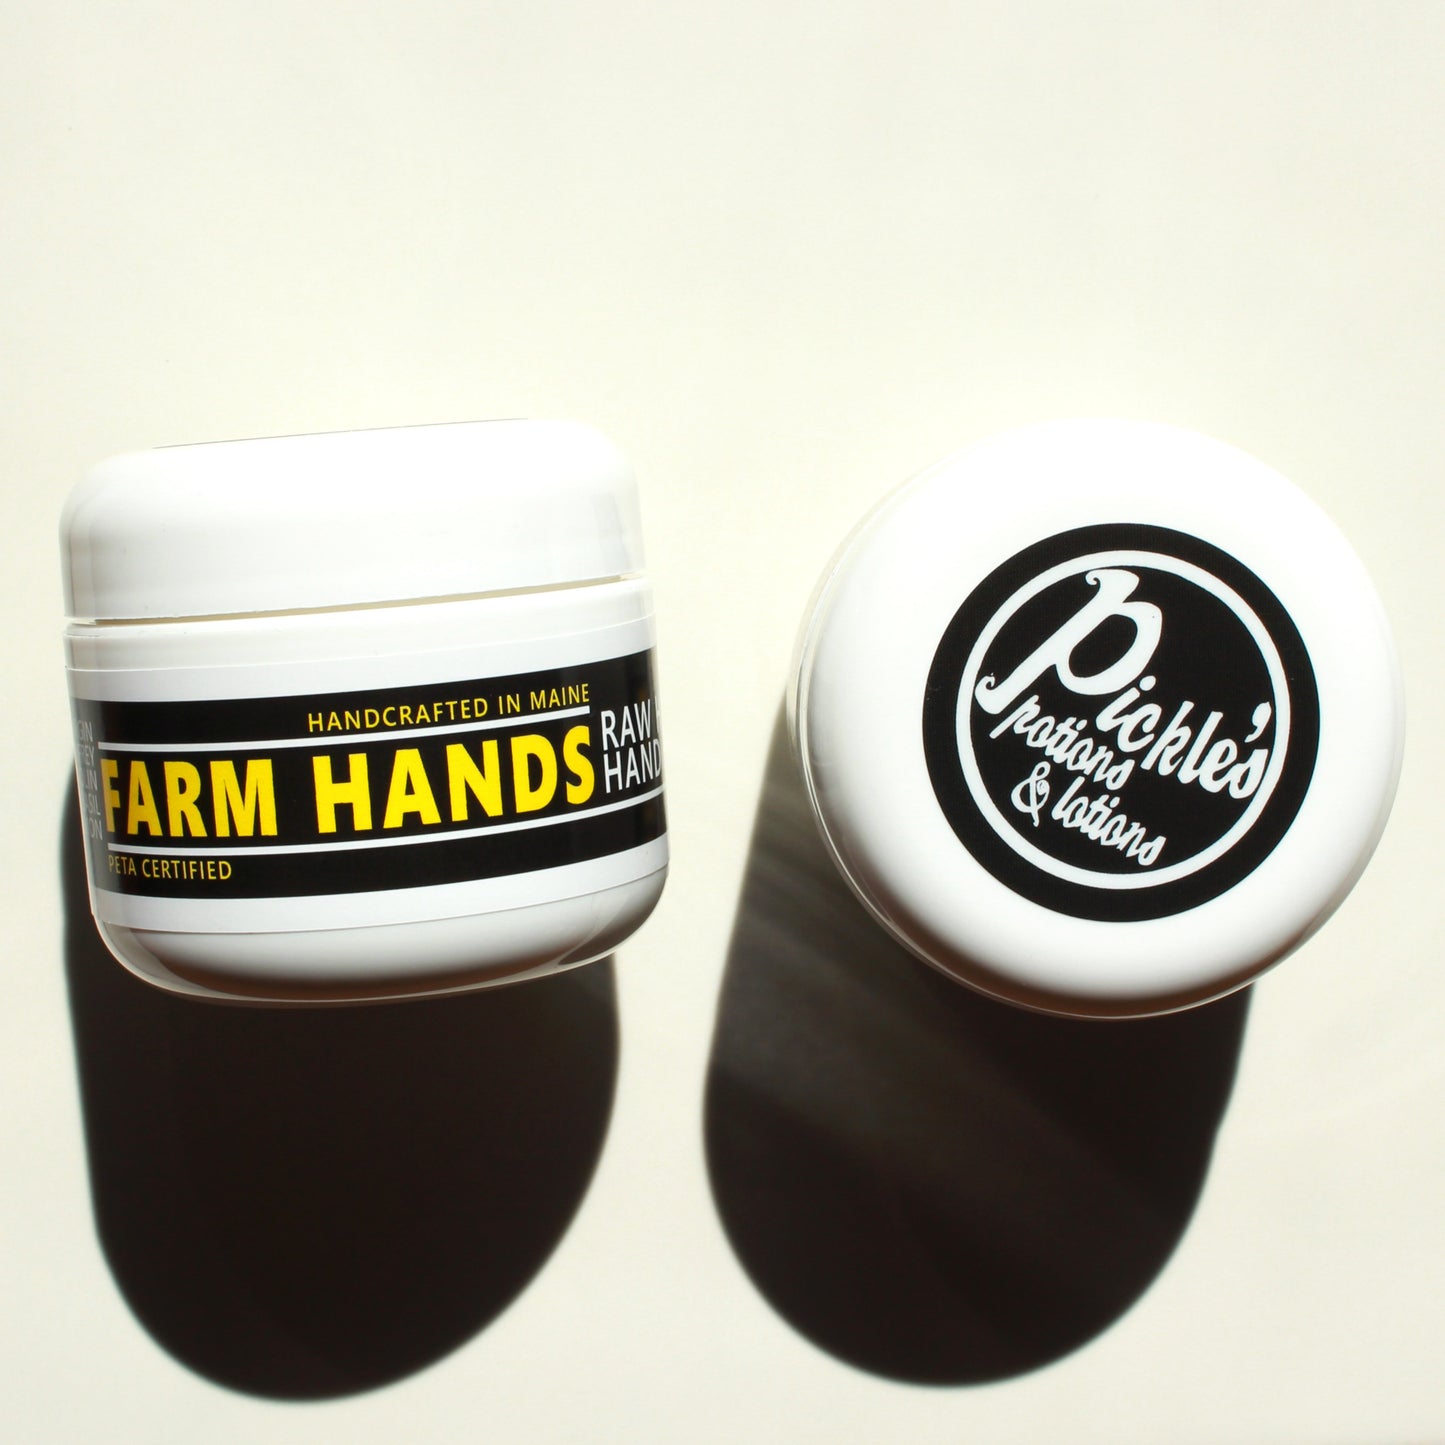 "Farm Hands" hand balm